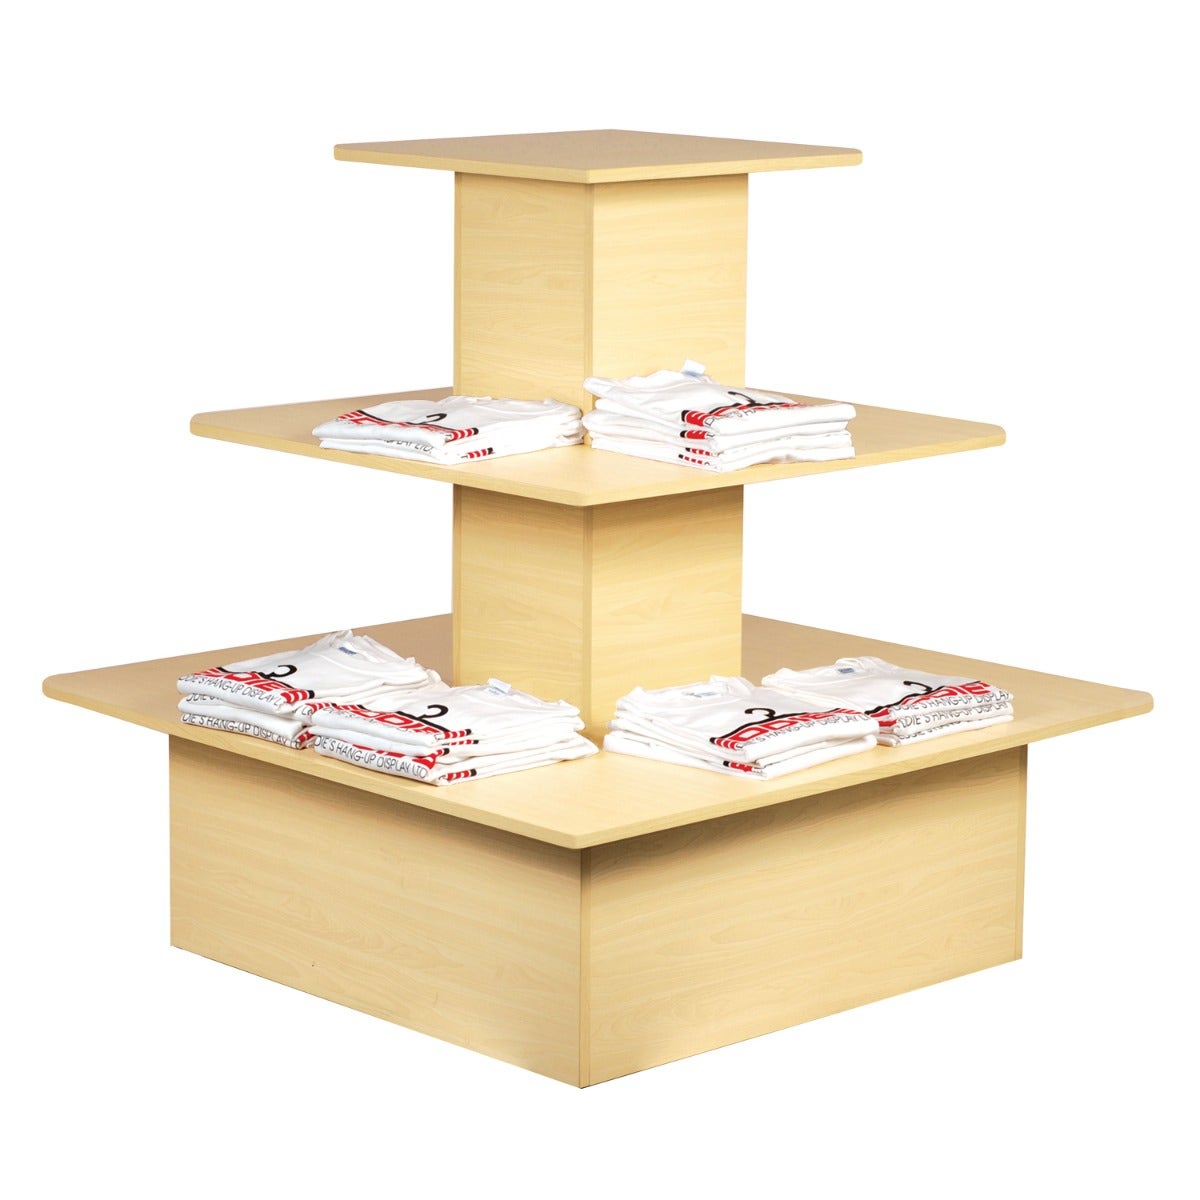 Three-tiered laminate display table